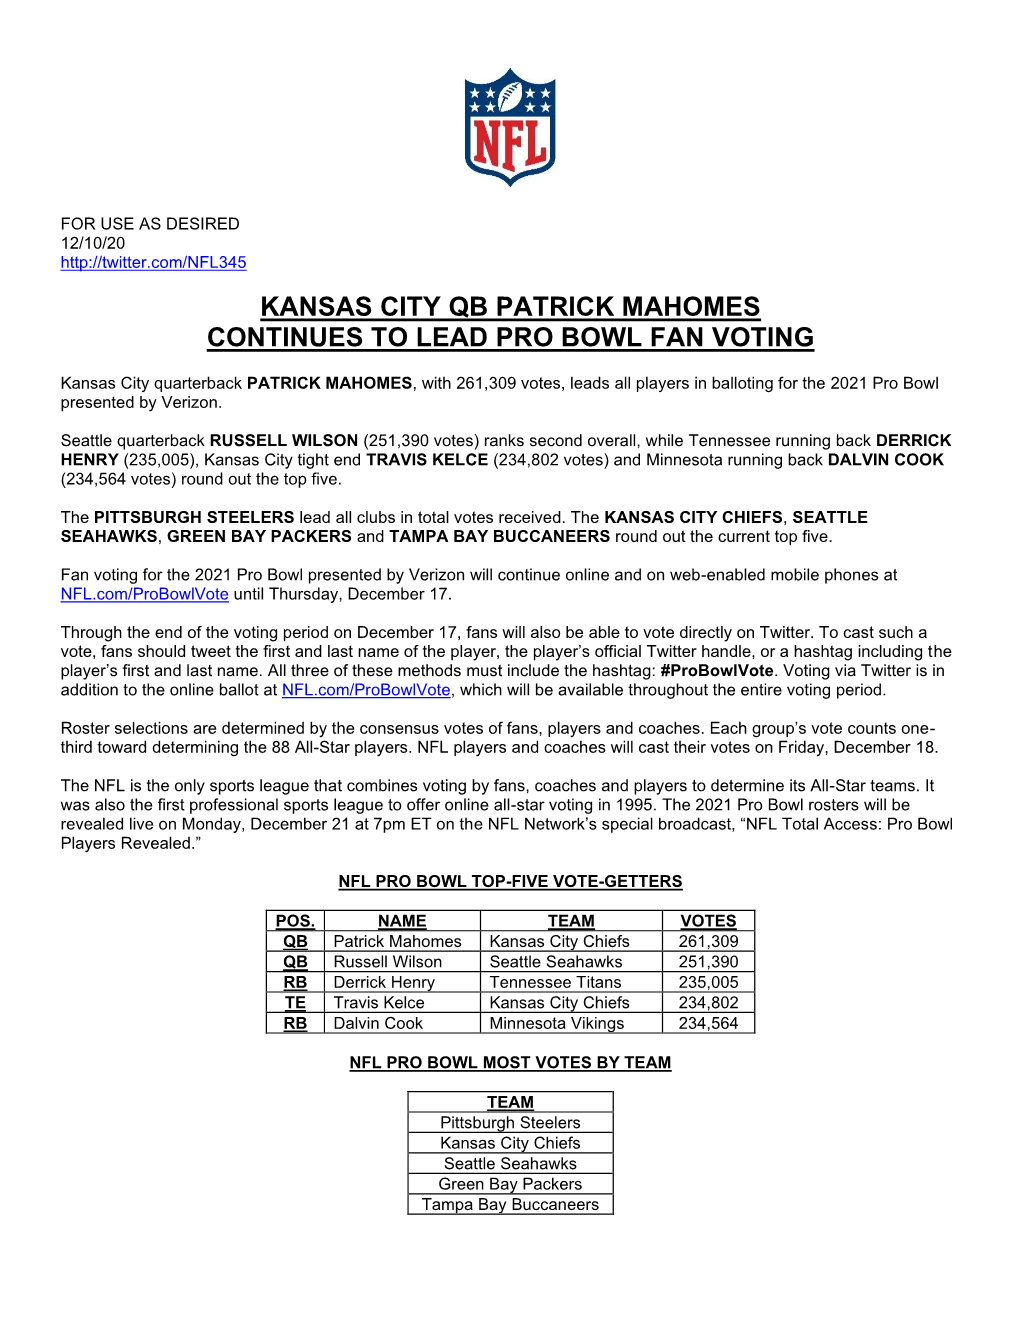 Kansas City Qb Patrick Mahomes Continues to Lead Pro Bowl Fan Voting